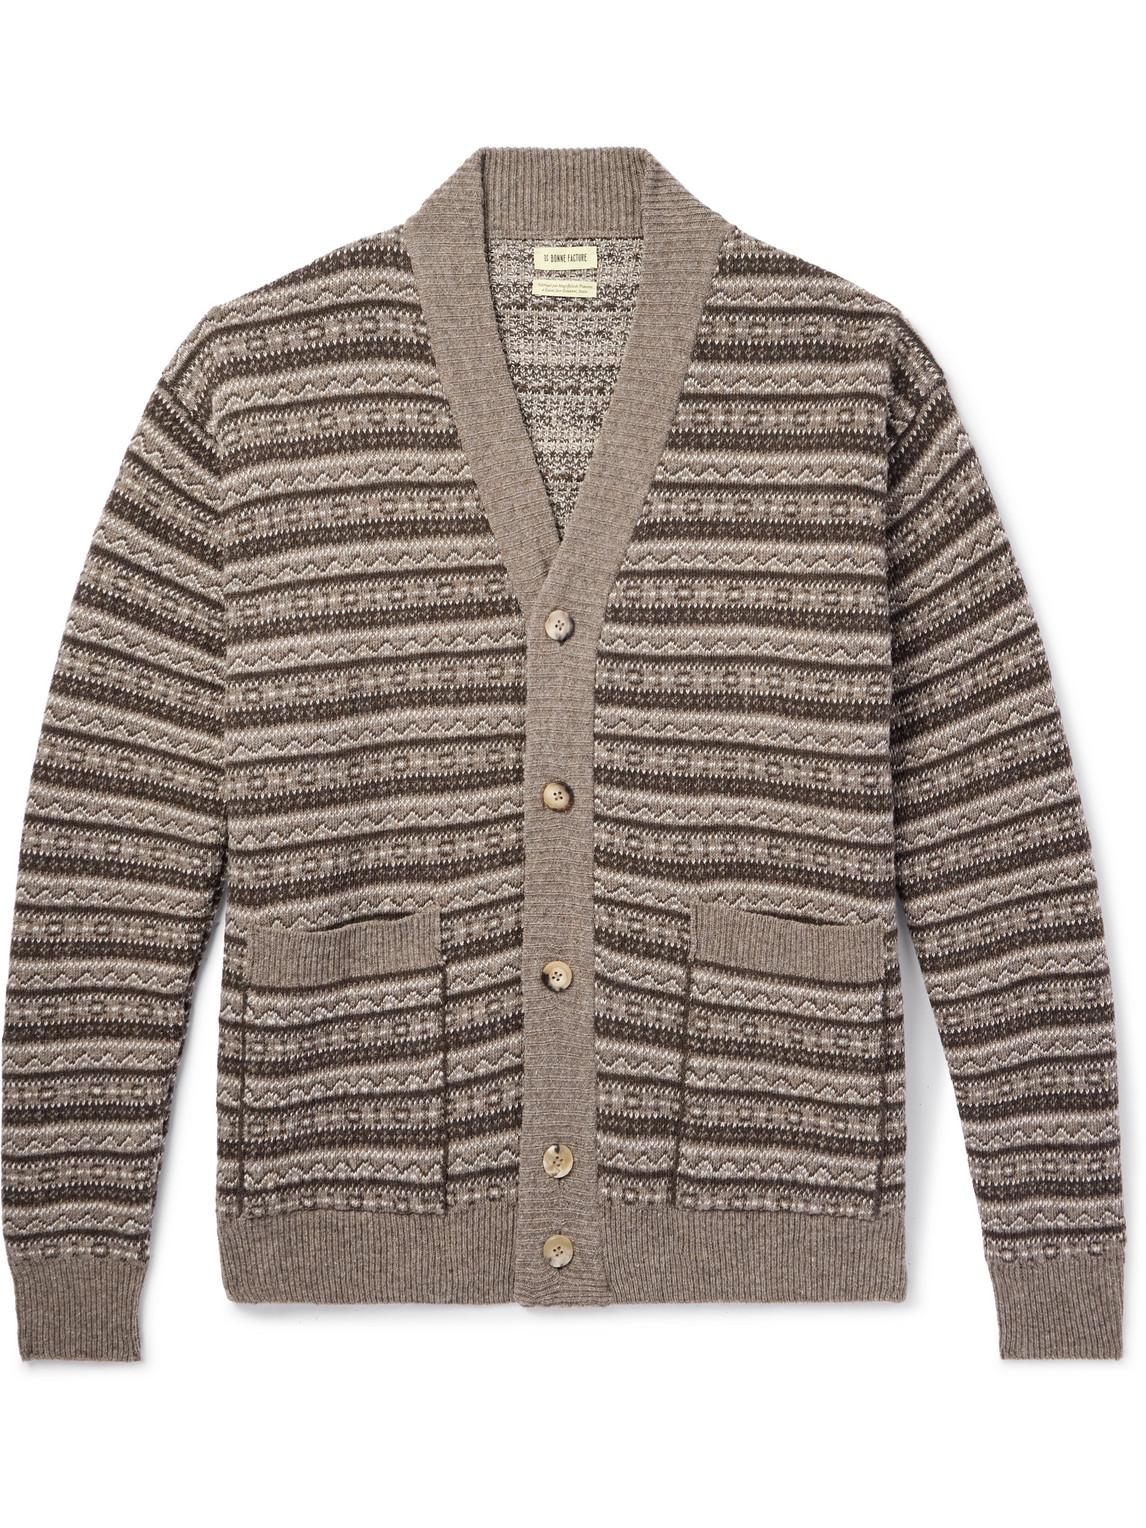 De Bonne Facture Striped Wool Cardigan In Brown